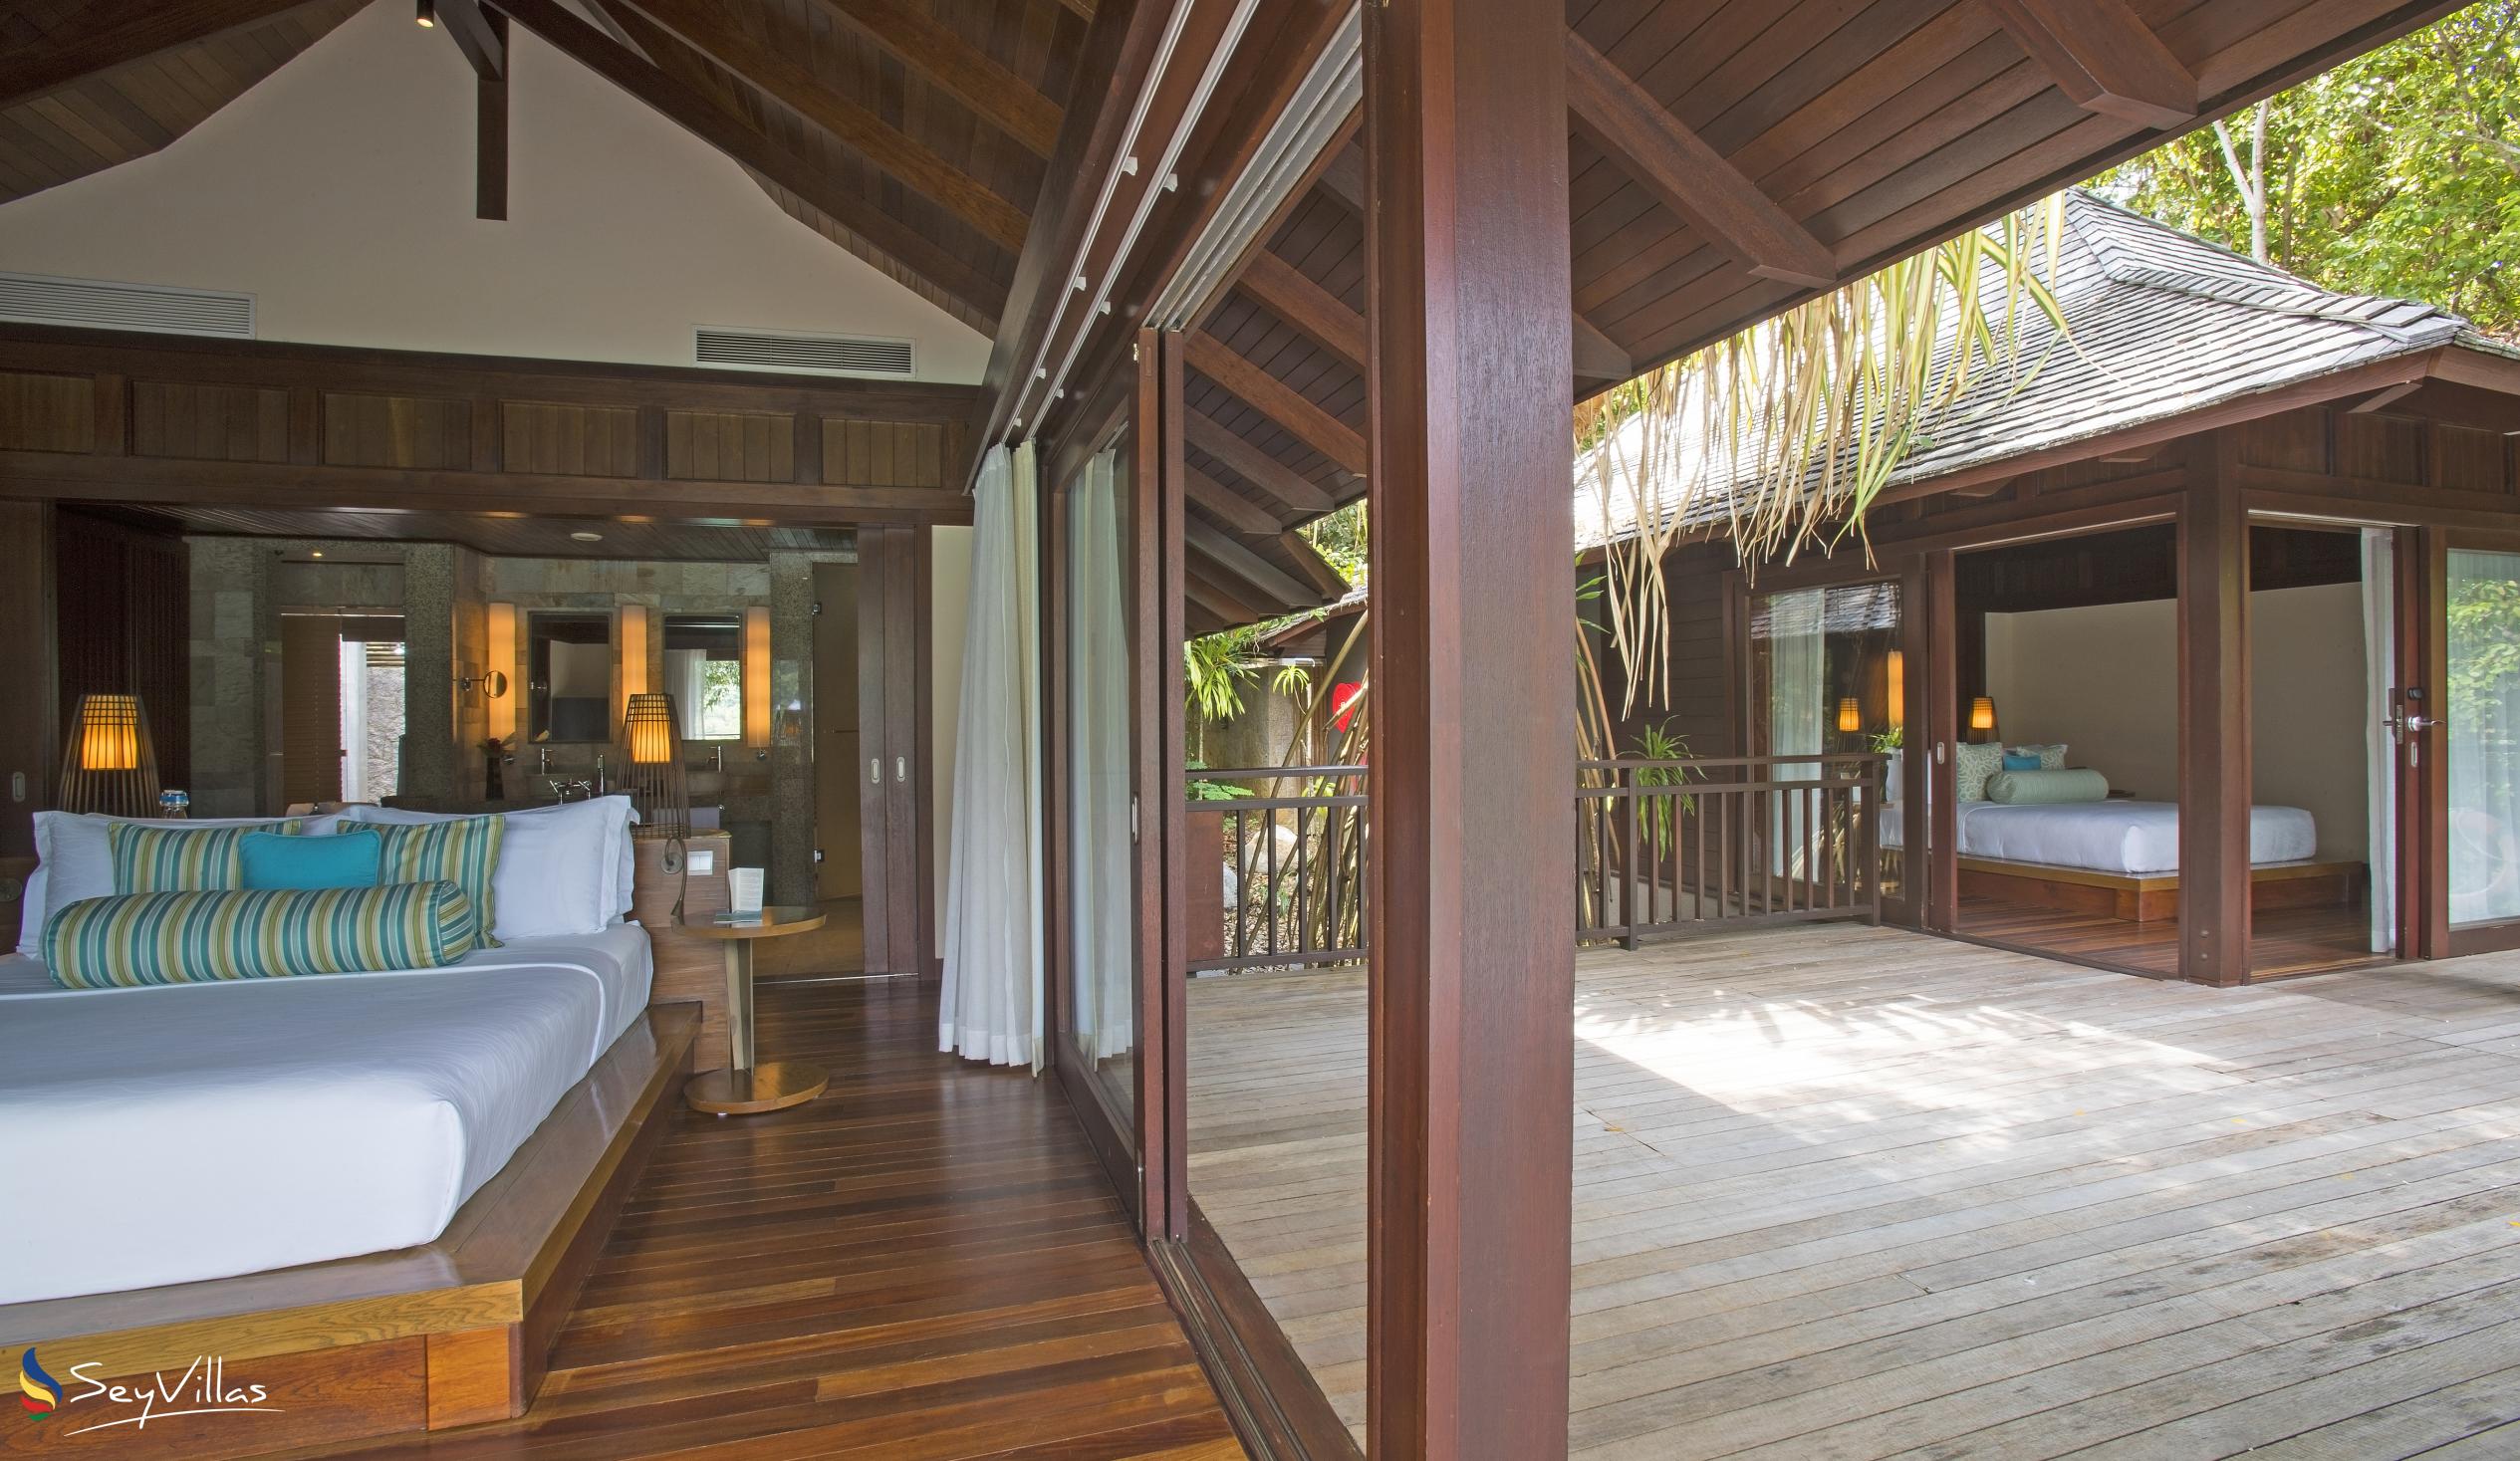 Photo 287: Constance Ephelia Seychelles - 1-Bedroom Hillside Villa - Mahé (Seychelles)